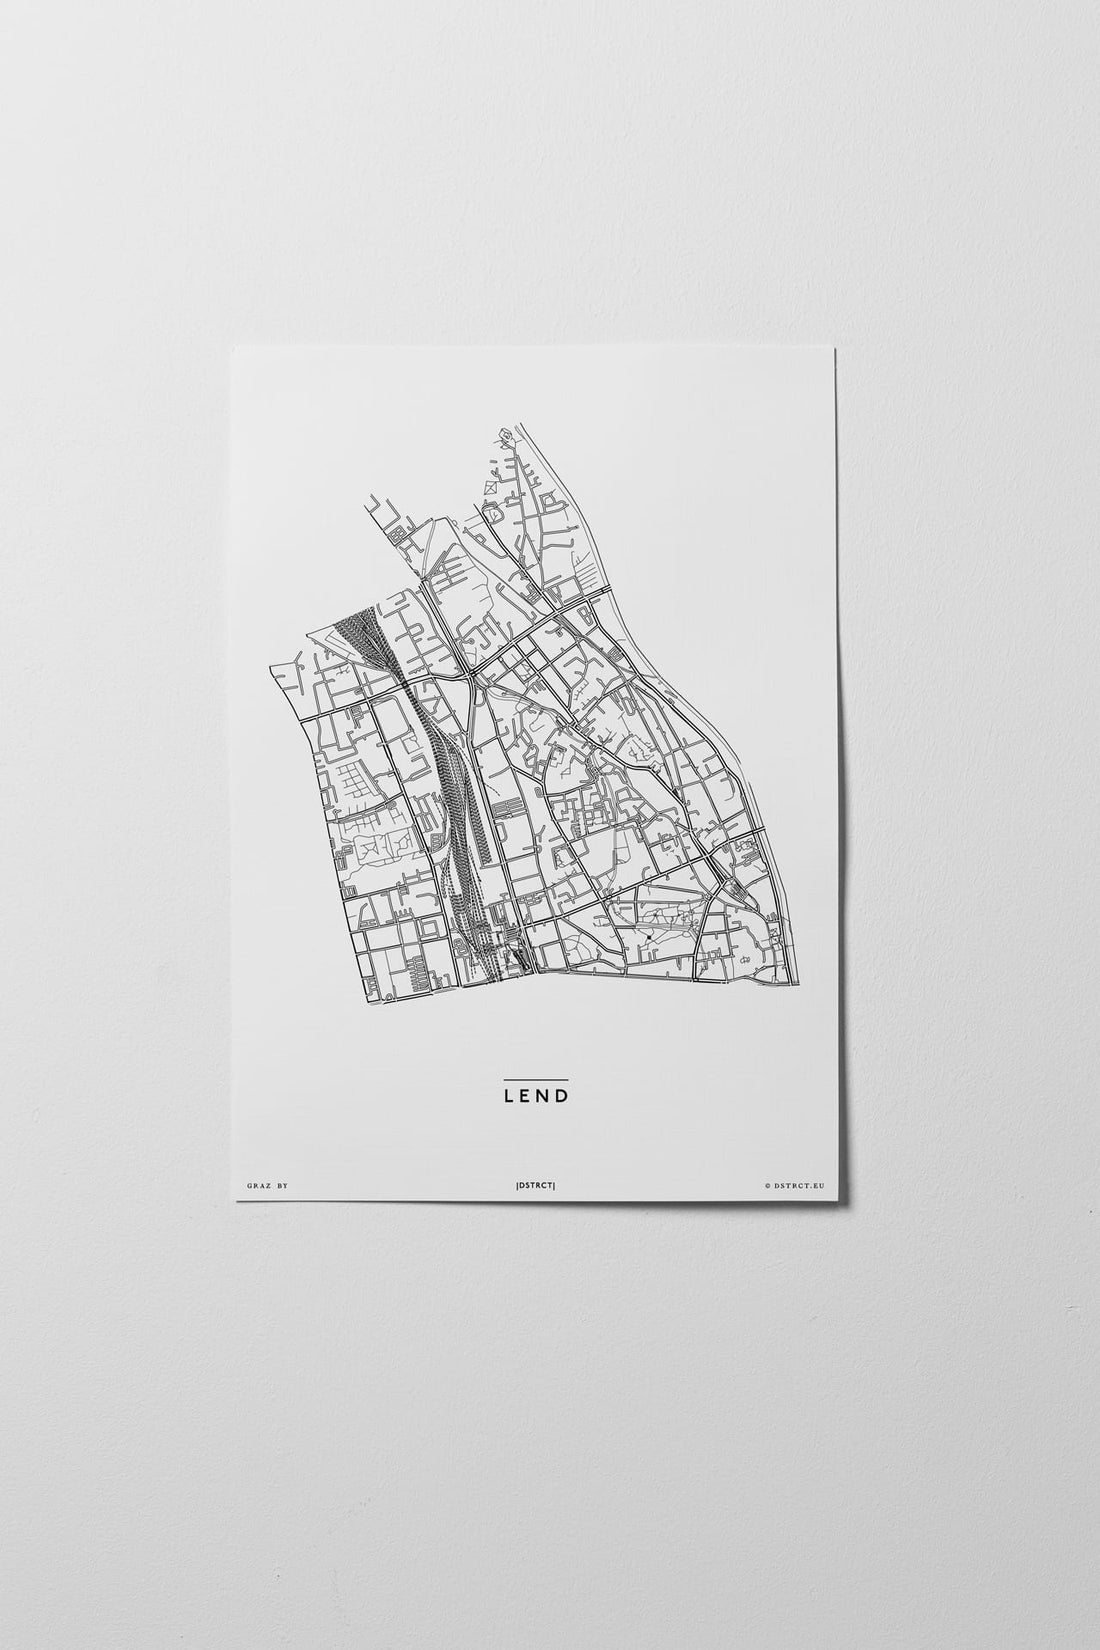 Lend | 8020, 8051 | Graz | City Map Karte Plan Bild Print Poster Unframed Ohne Rahmen